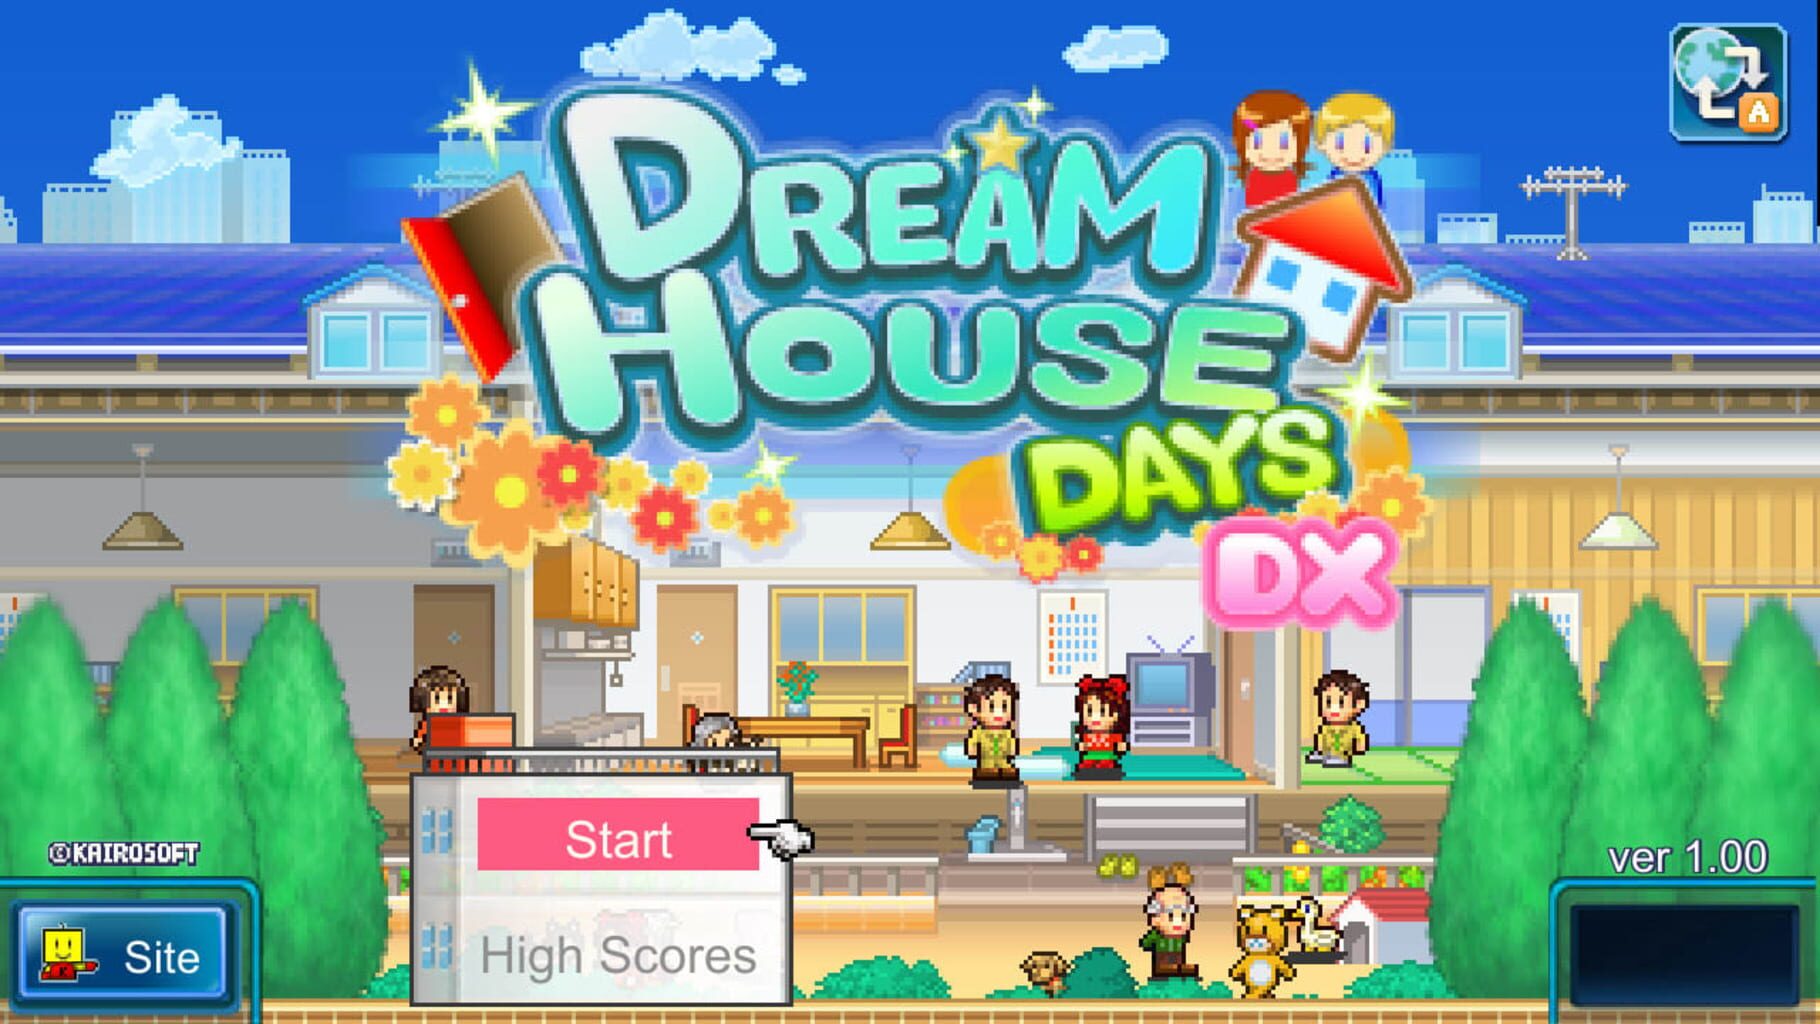 Dream House Days DX screenshot